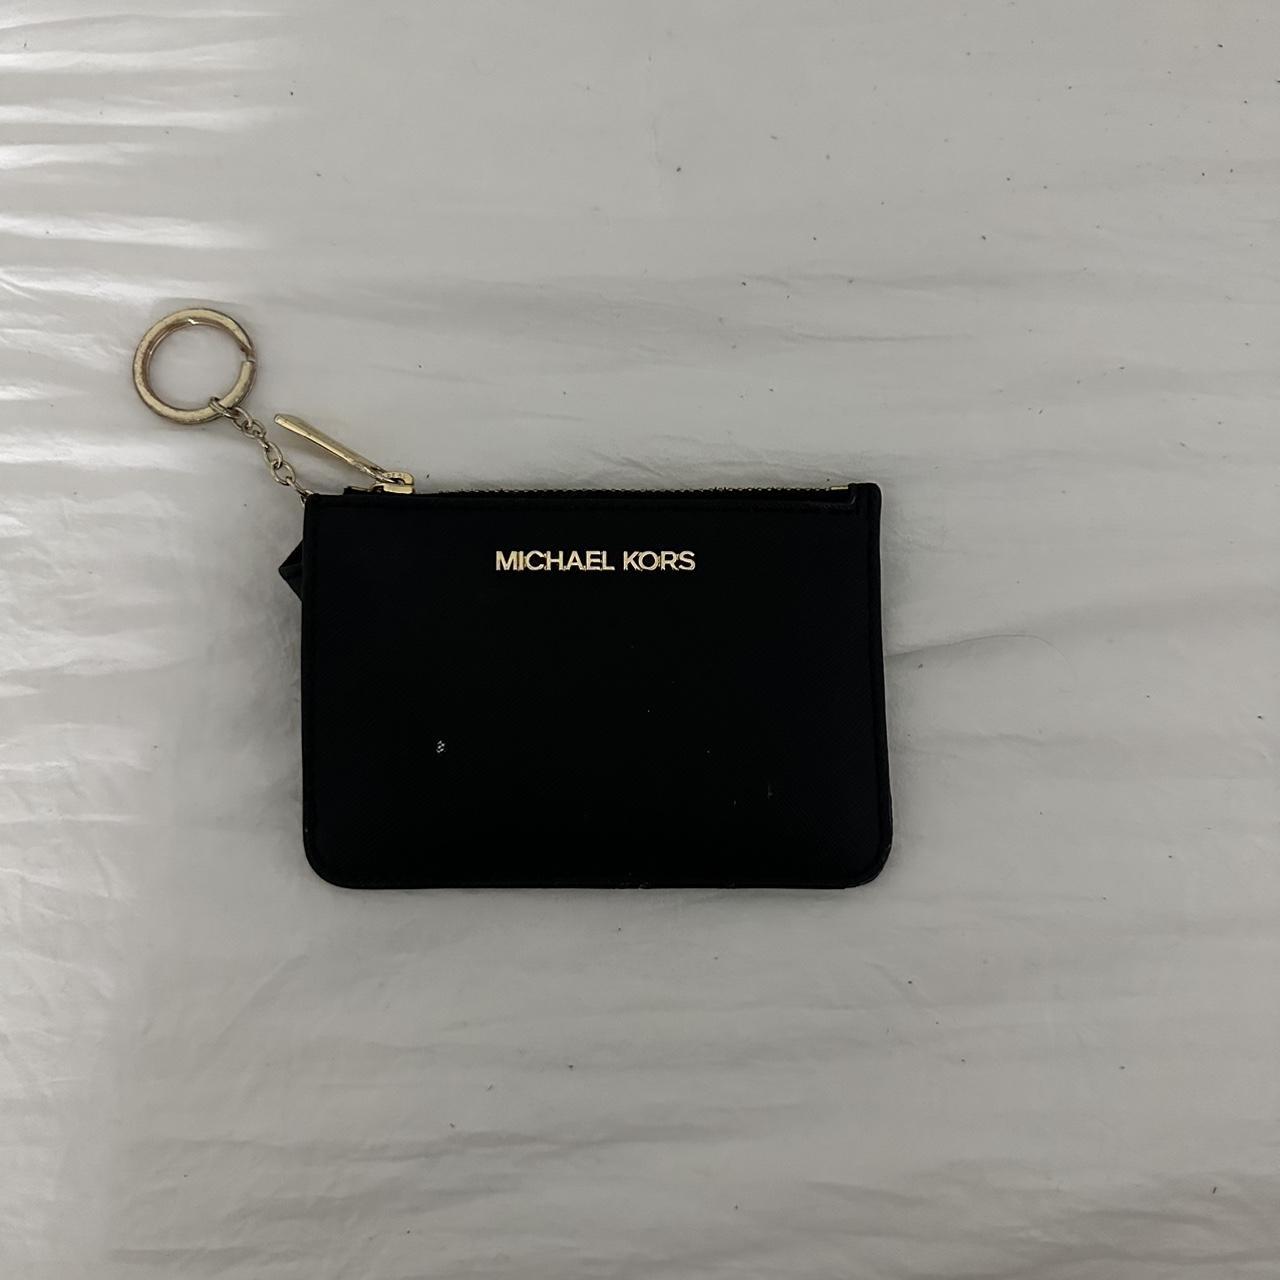 Michael Kors Mini Purse Keychain Fob Gold Color Bag charm Key holder | eBay